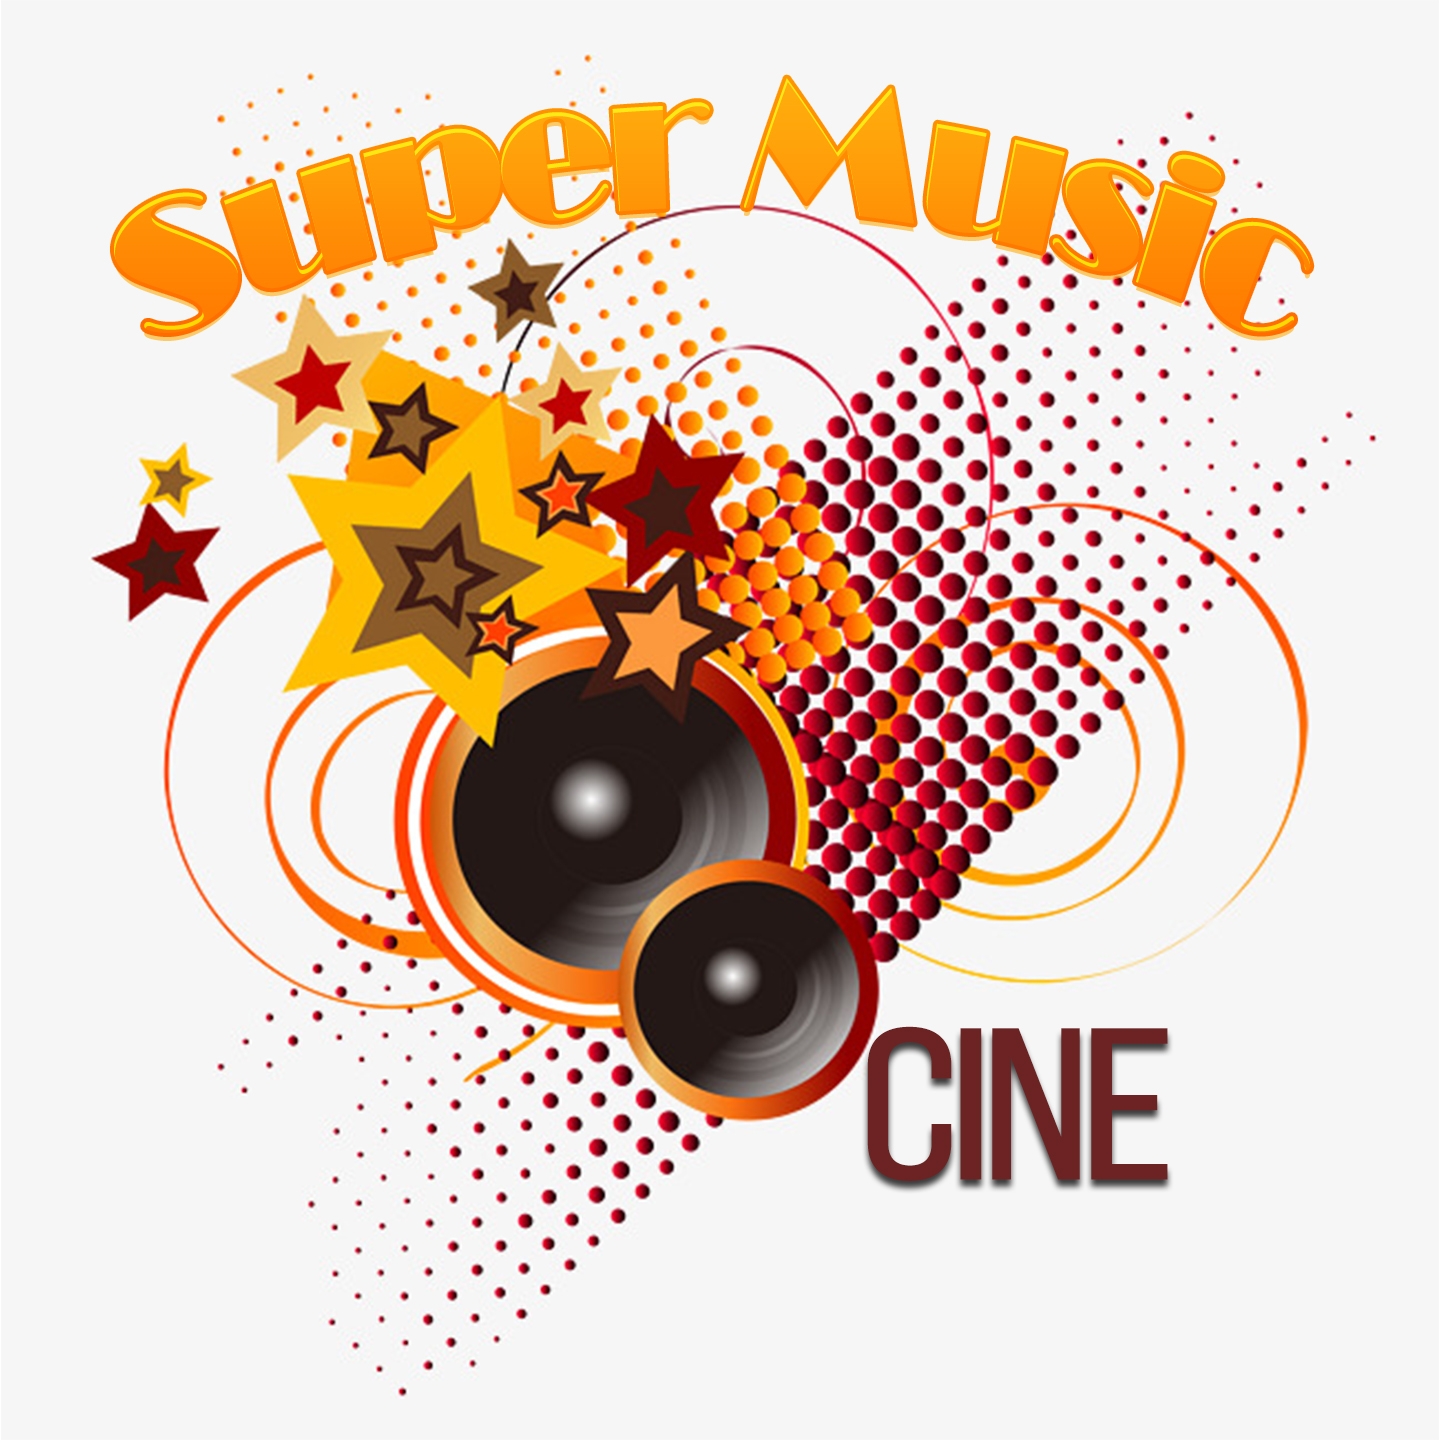 Super Music, Cine